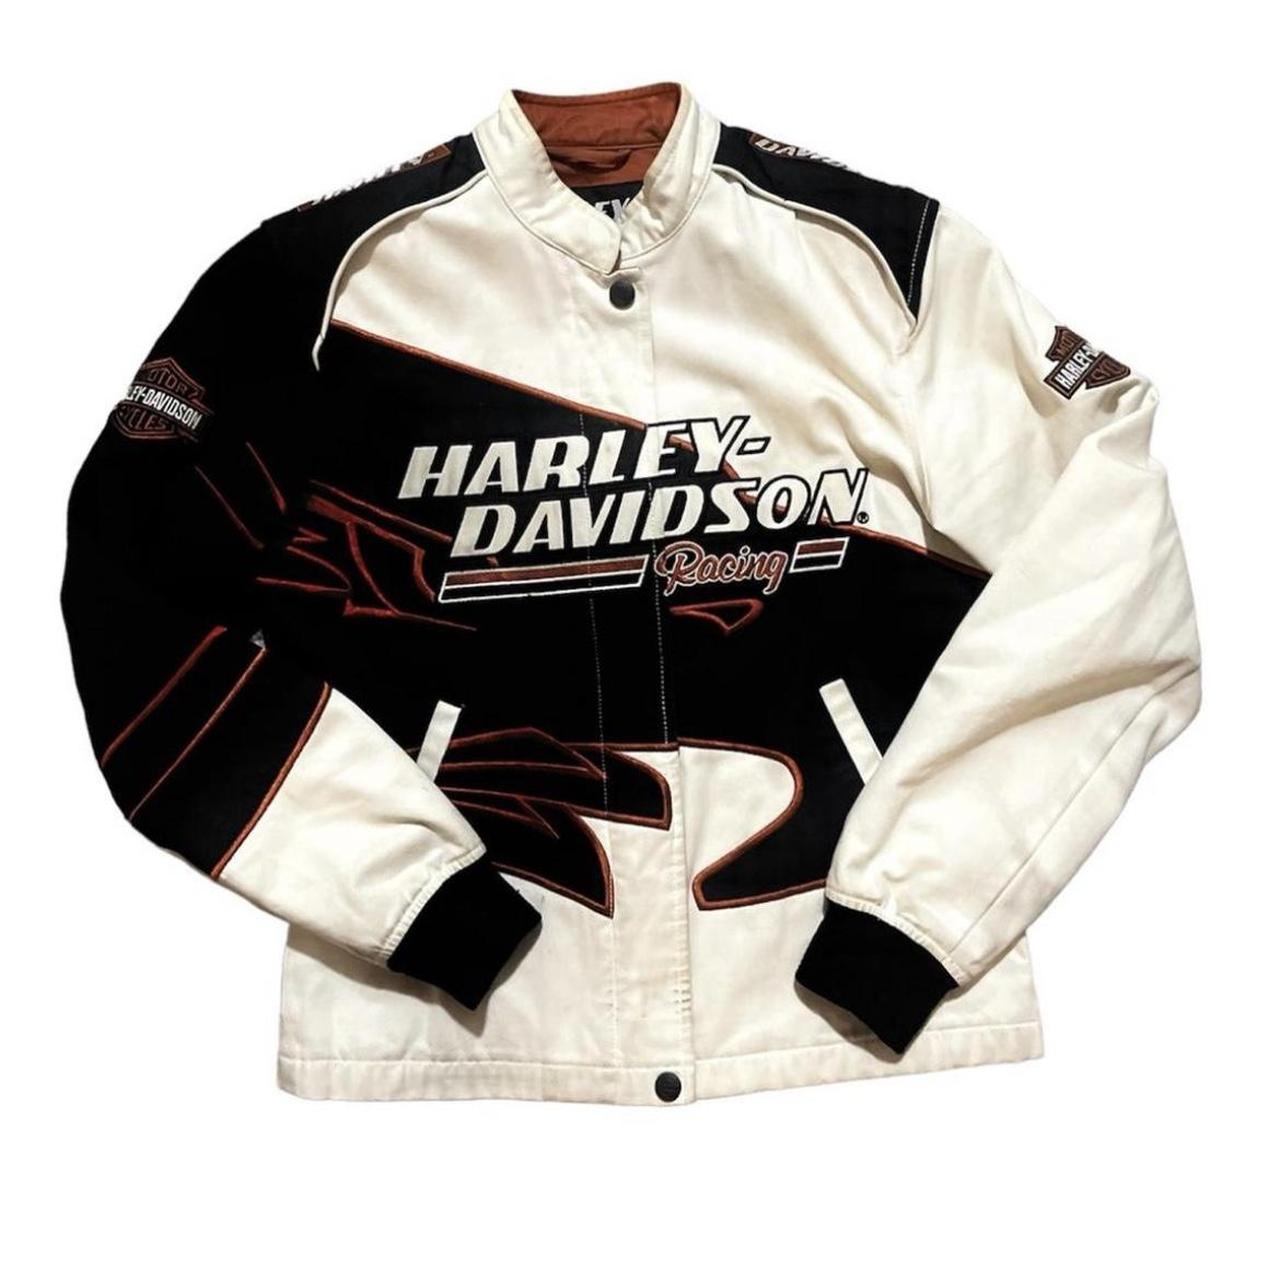 Harley Davidson Racing Jacket Size Women’s M... - Depop